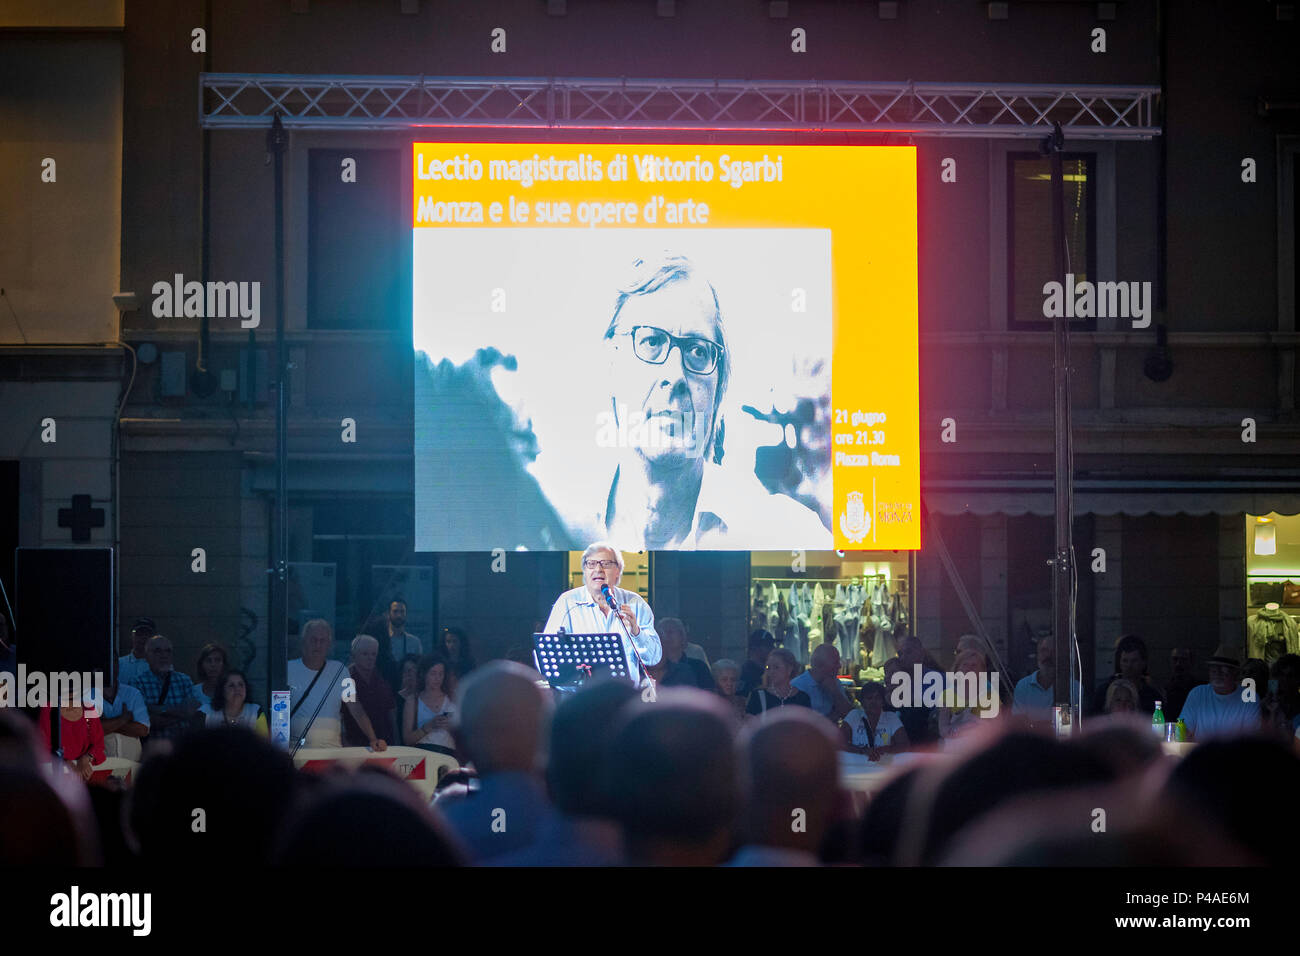 Monza, Italy - Jun 21 2018: Lectio Magistralis of Vittorio Sgarbi about the artistic masterpieces in the city Credit: Alfio Finocchiaro/Alamy Live News Stock Photo